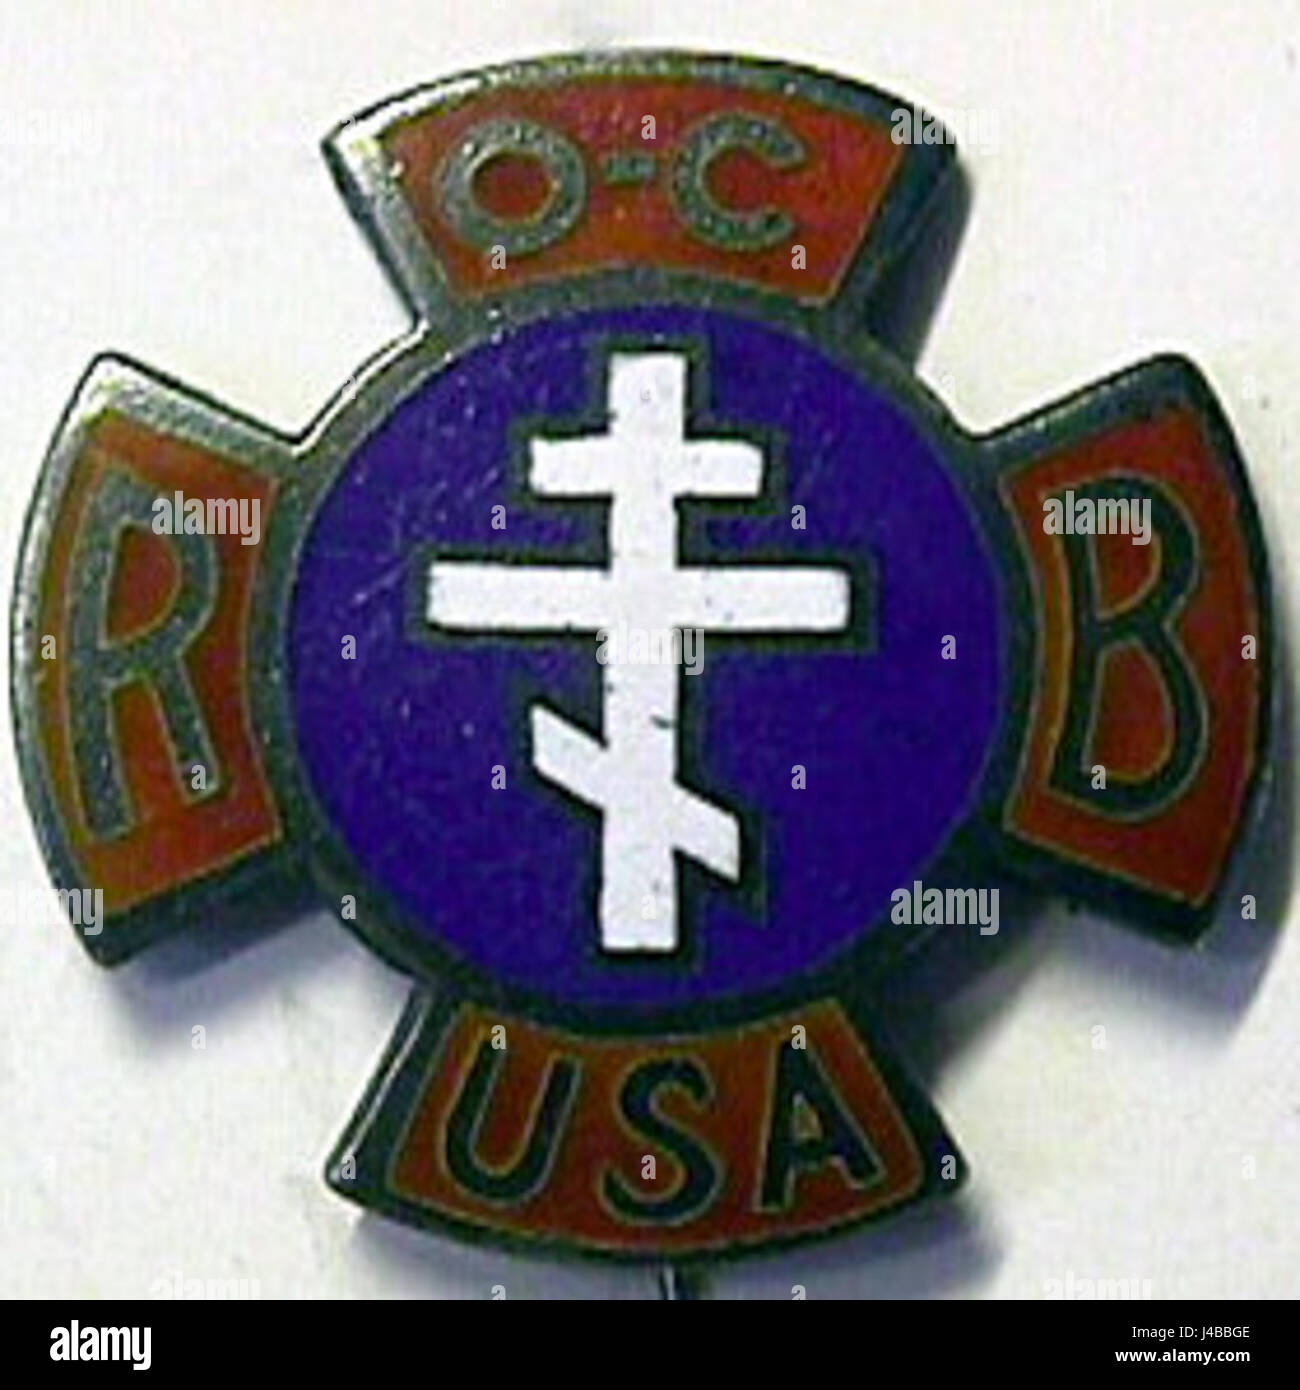 Cross Badge Enamel Pin Black 1 x 2cm 